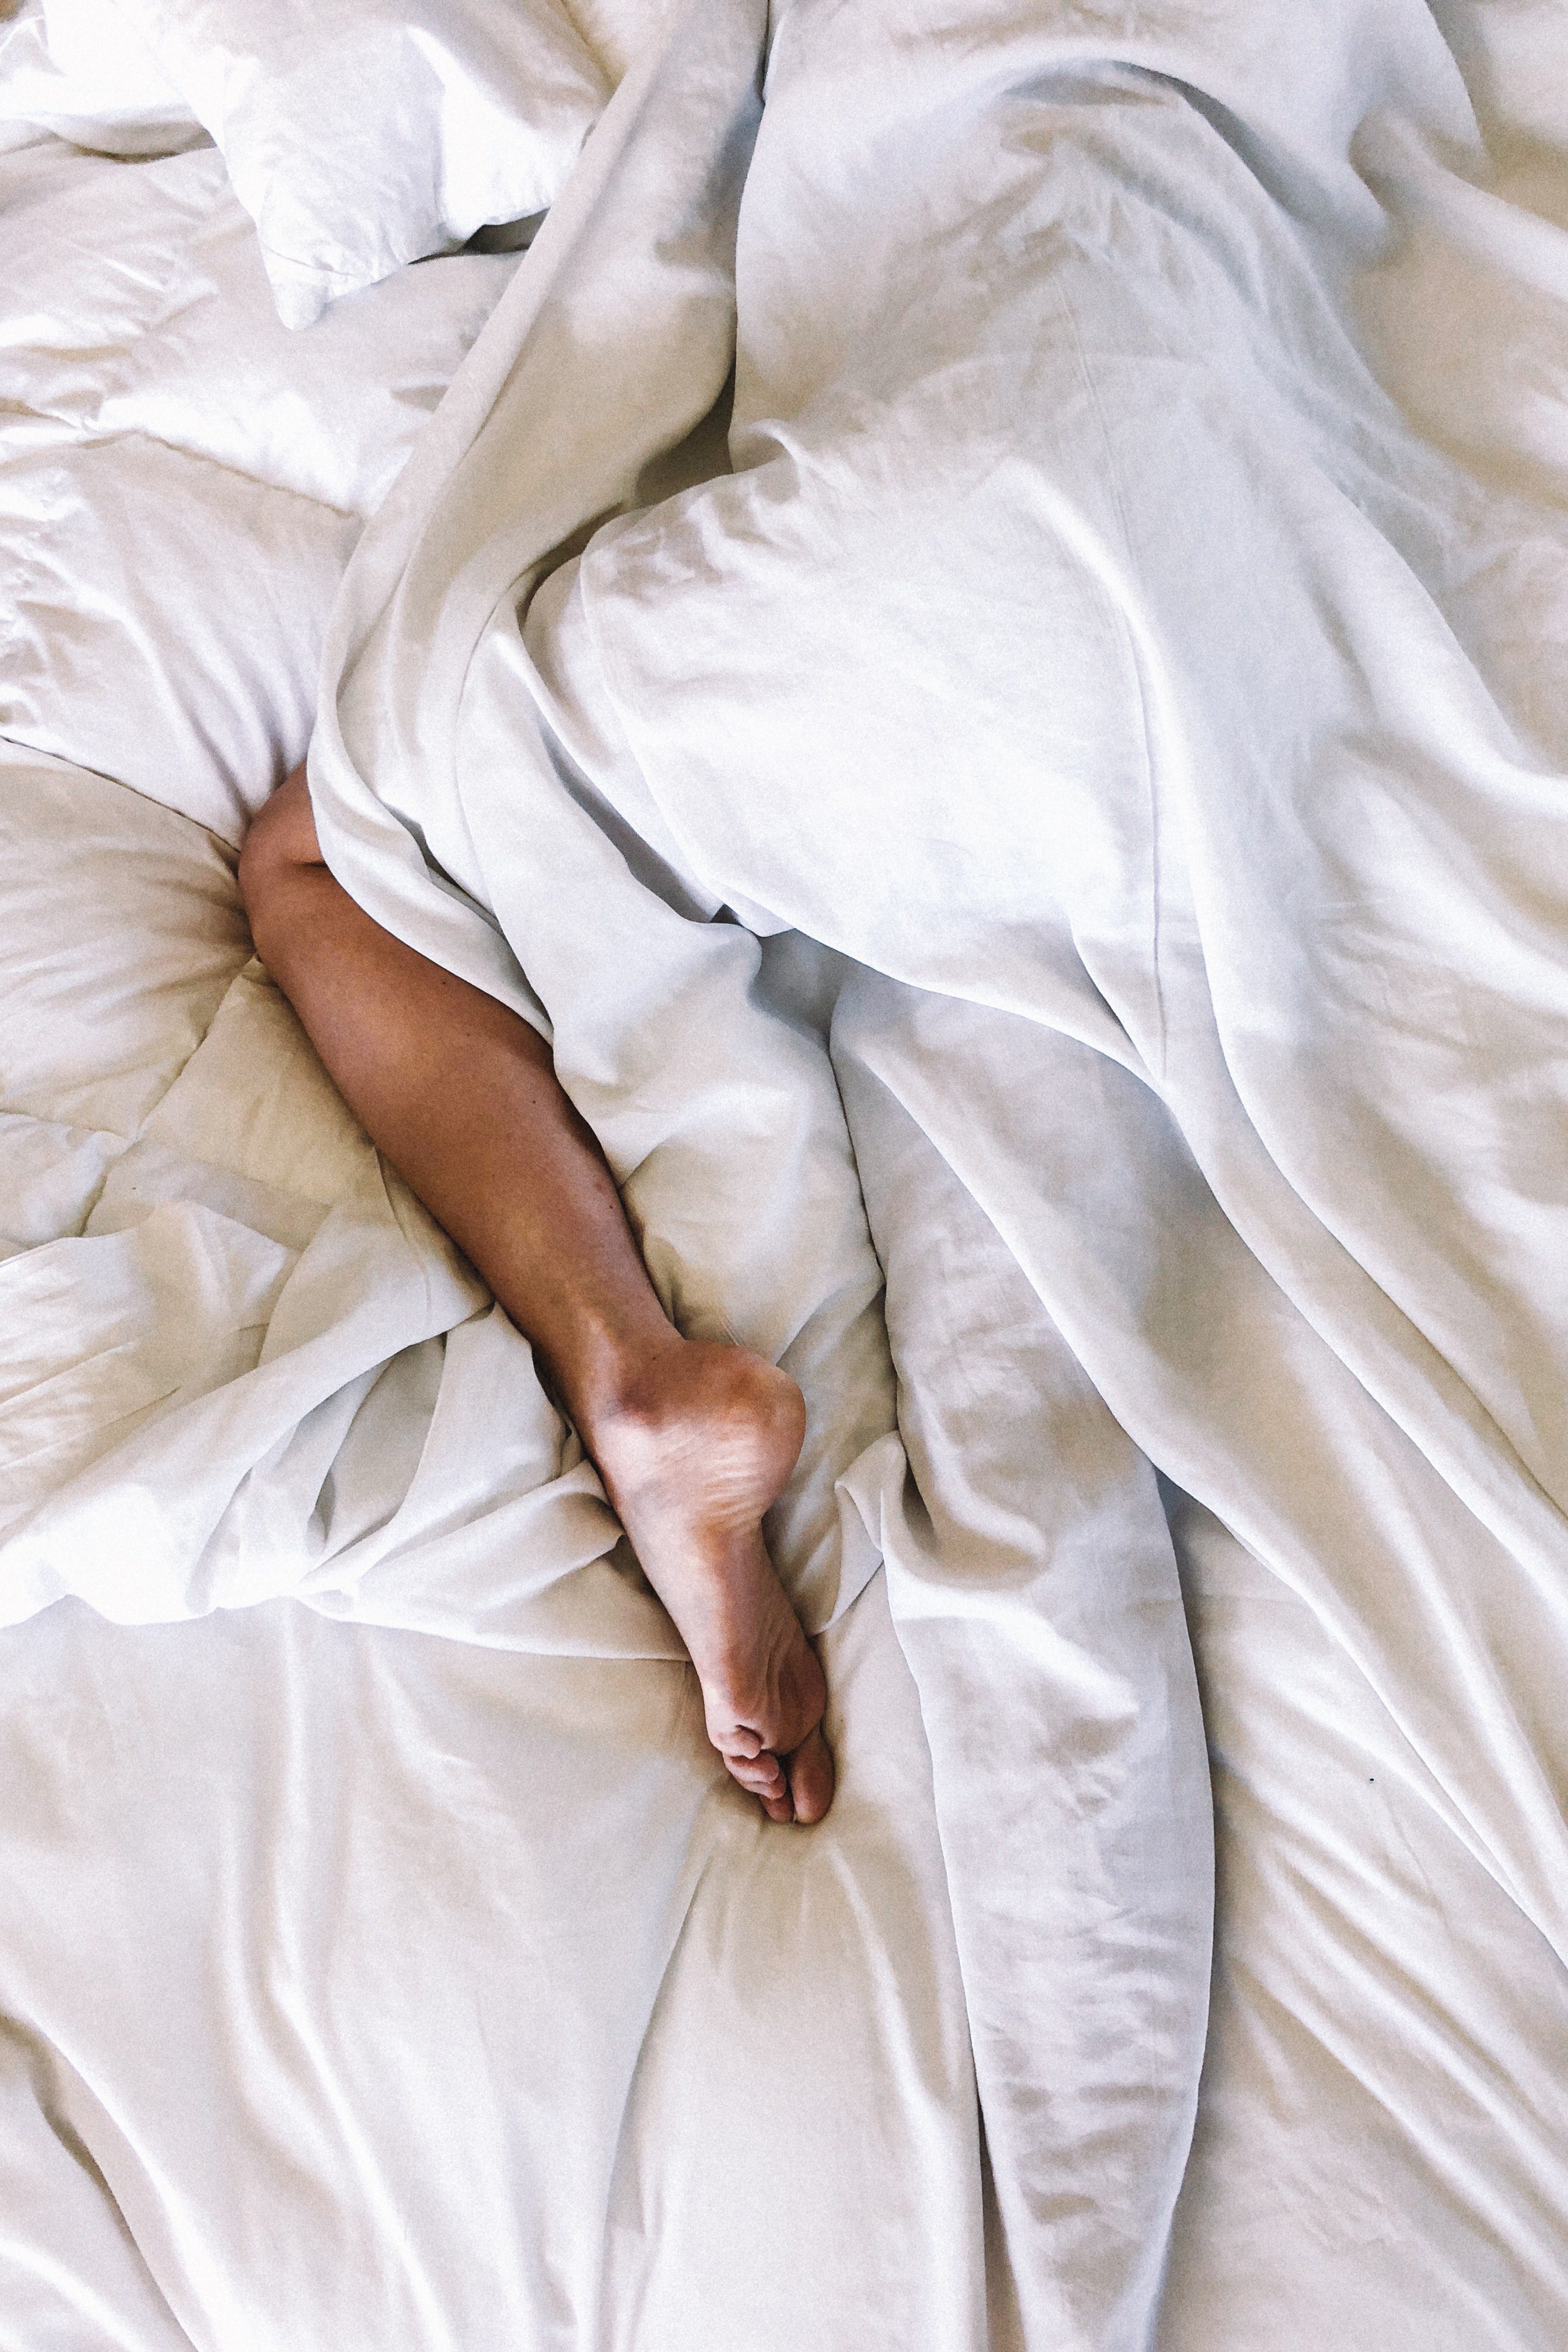 6 BENEFITS OF GETTING A GOOD NIGHT’S SLEEP